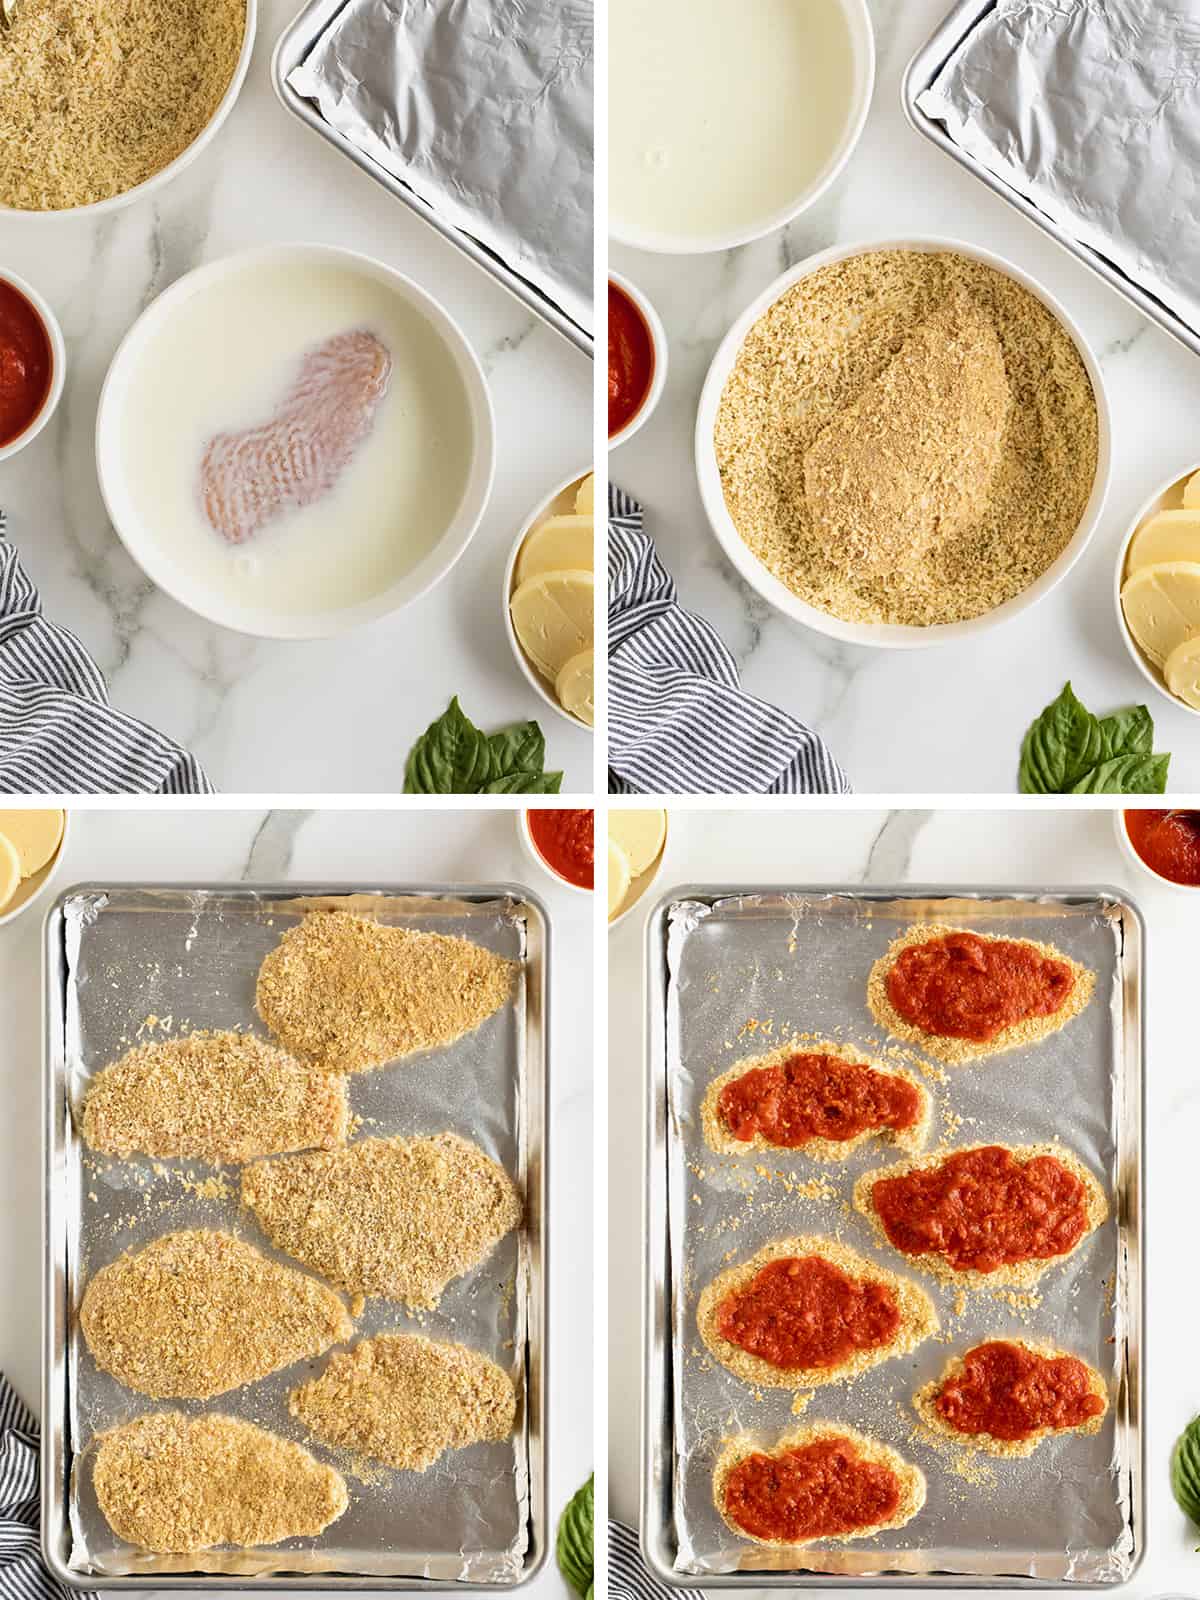 Steps to Make Chicken Parmesan.